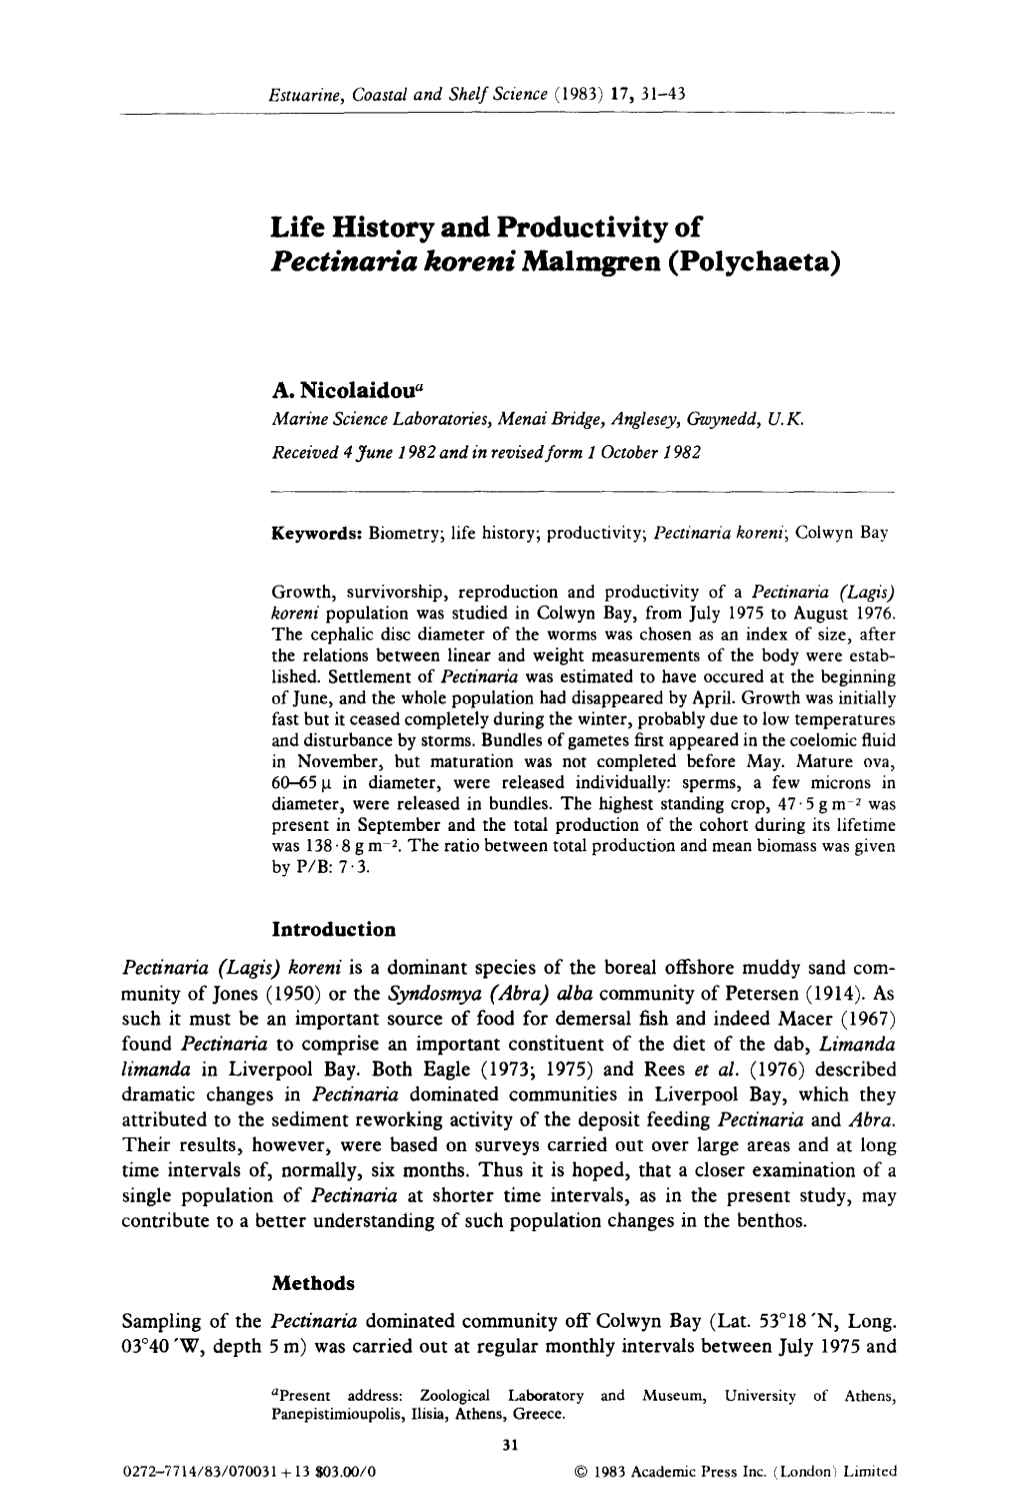 Life History and Productivity of Pectinaria Koreni Malmgren (Polychaeta)